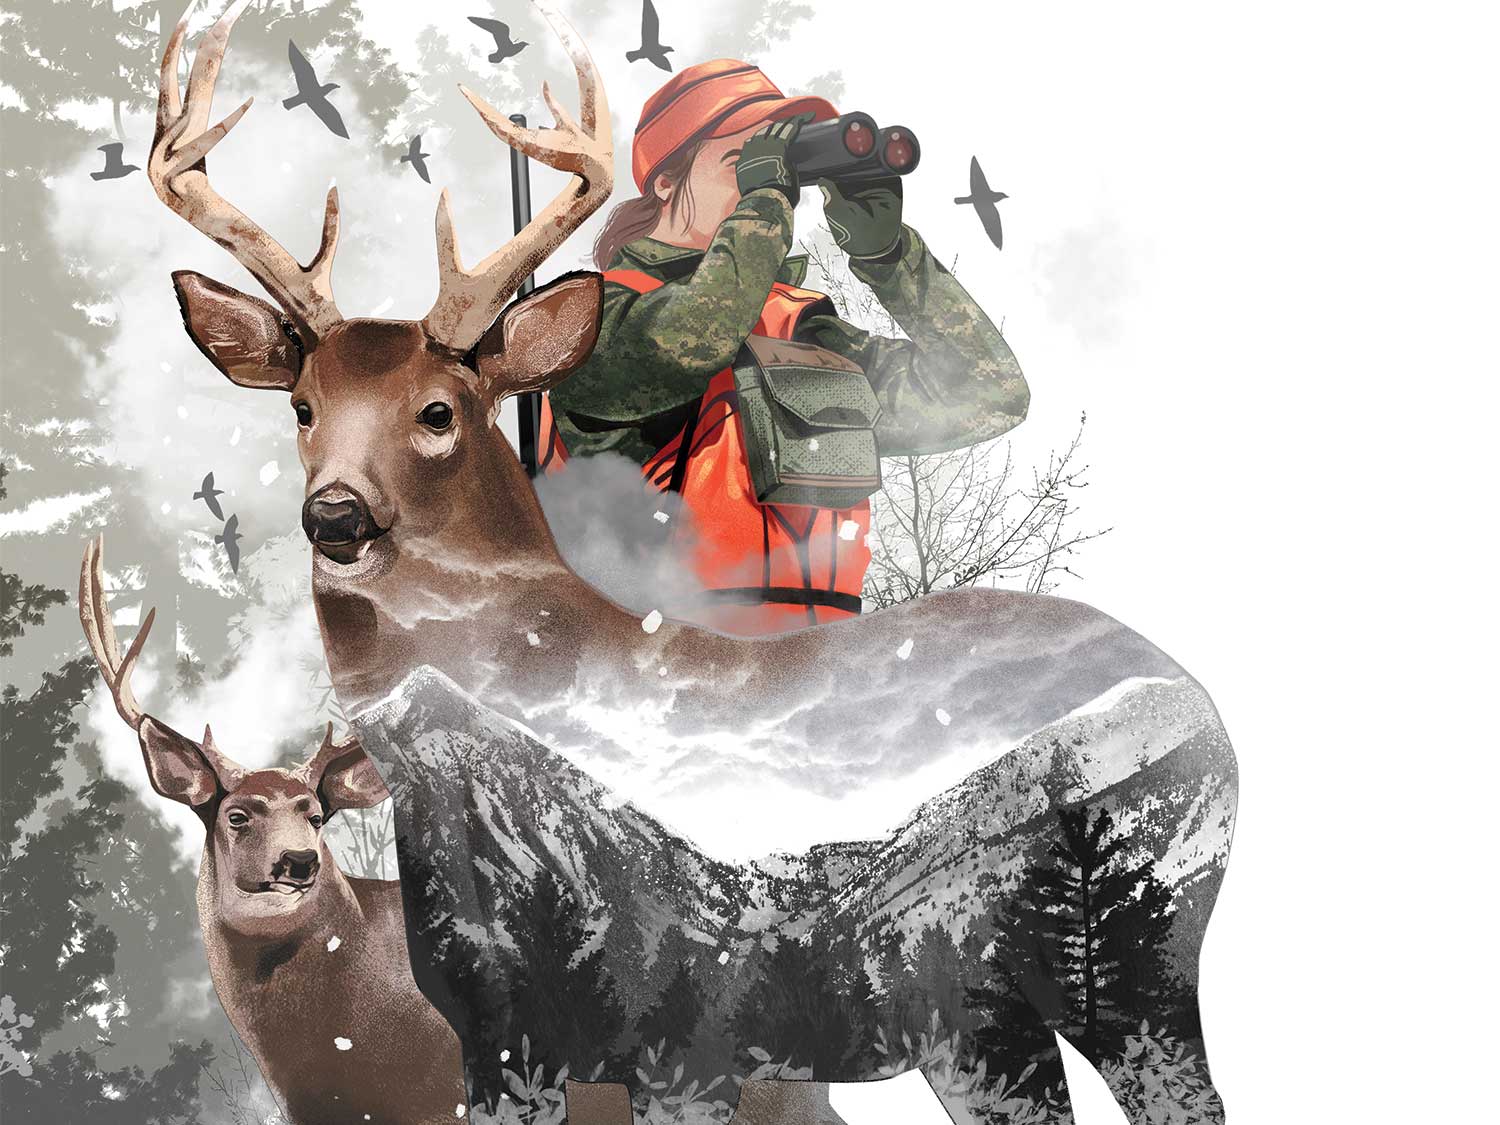 Illustration of a hunter using binoculars next to bucks, deer, and mountains.